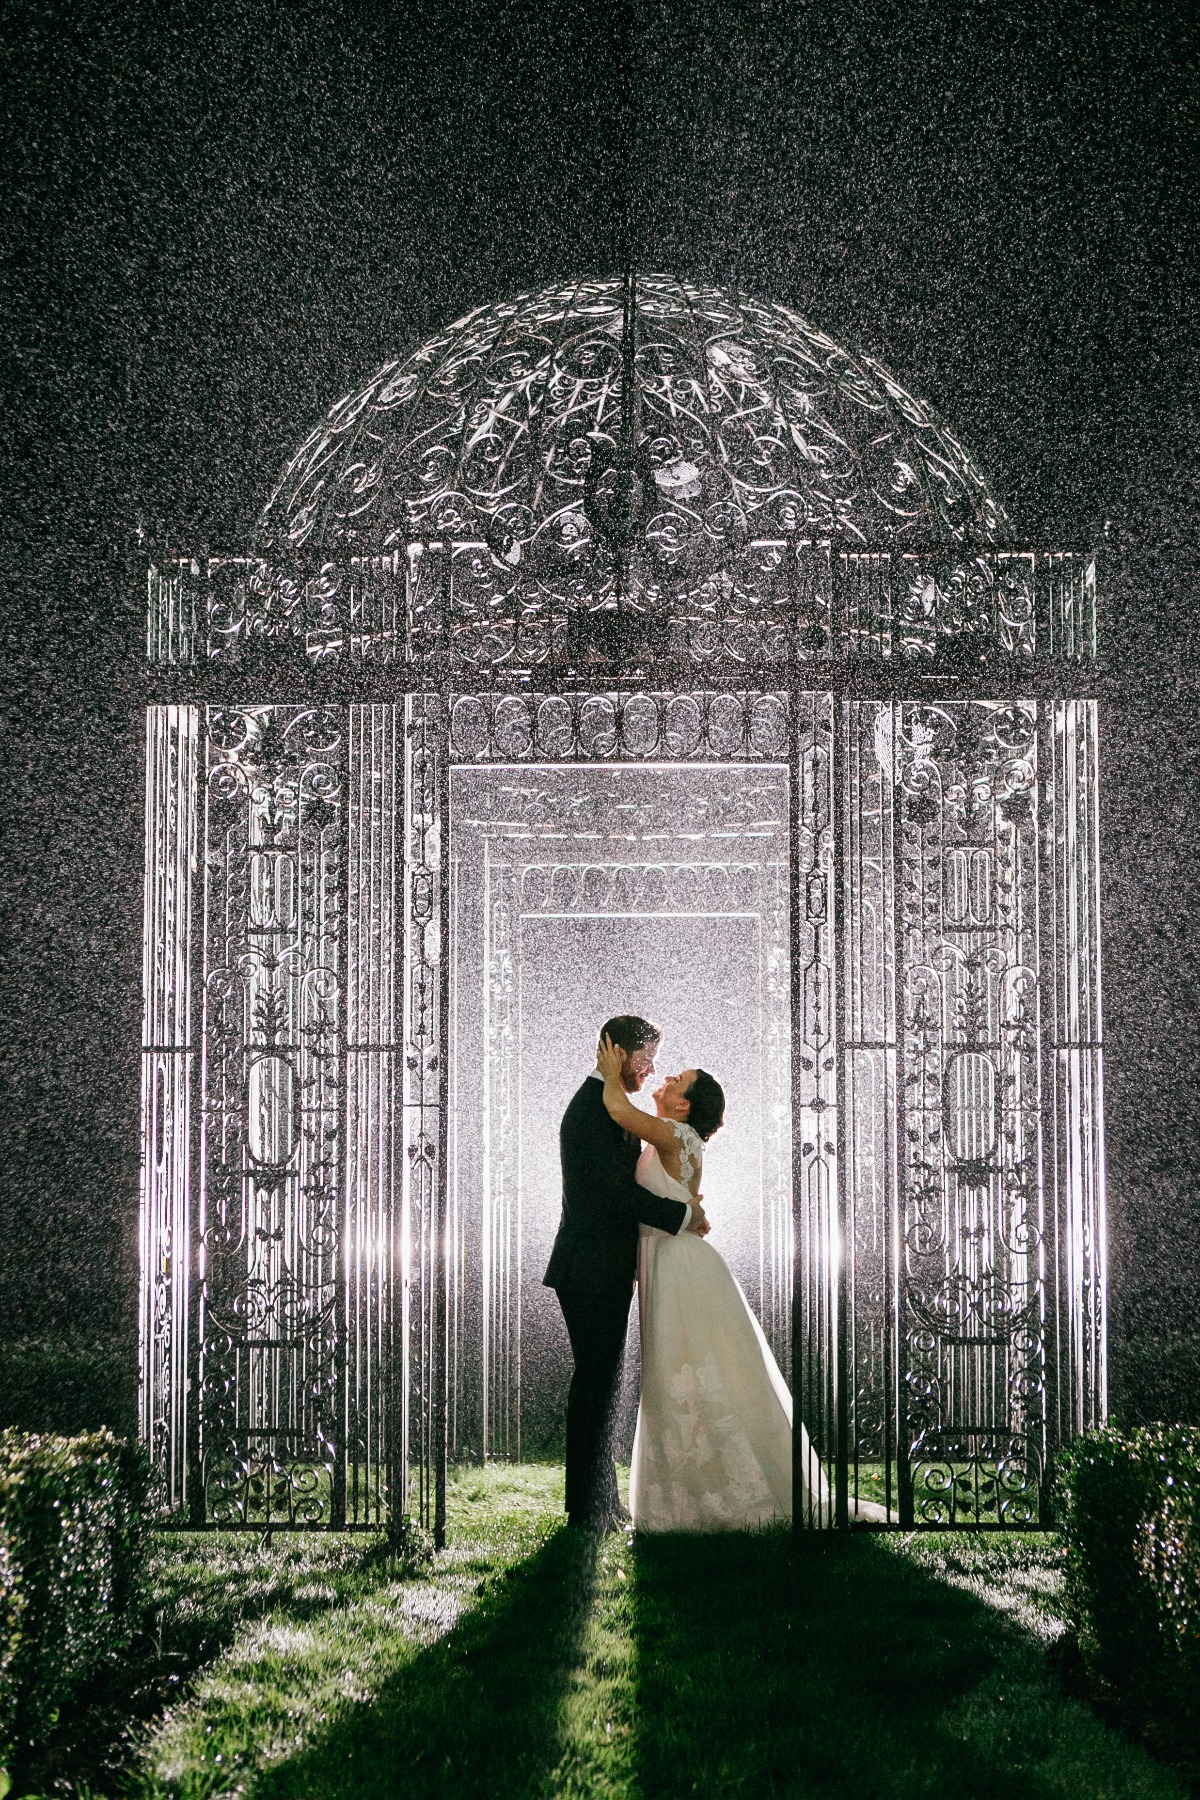 Wedding in the rain